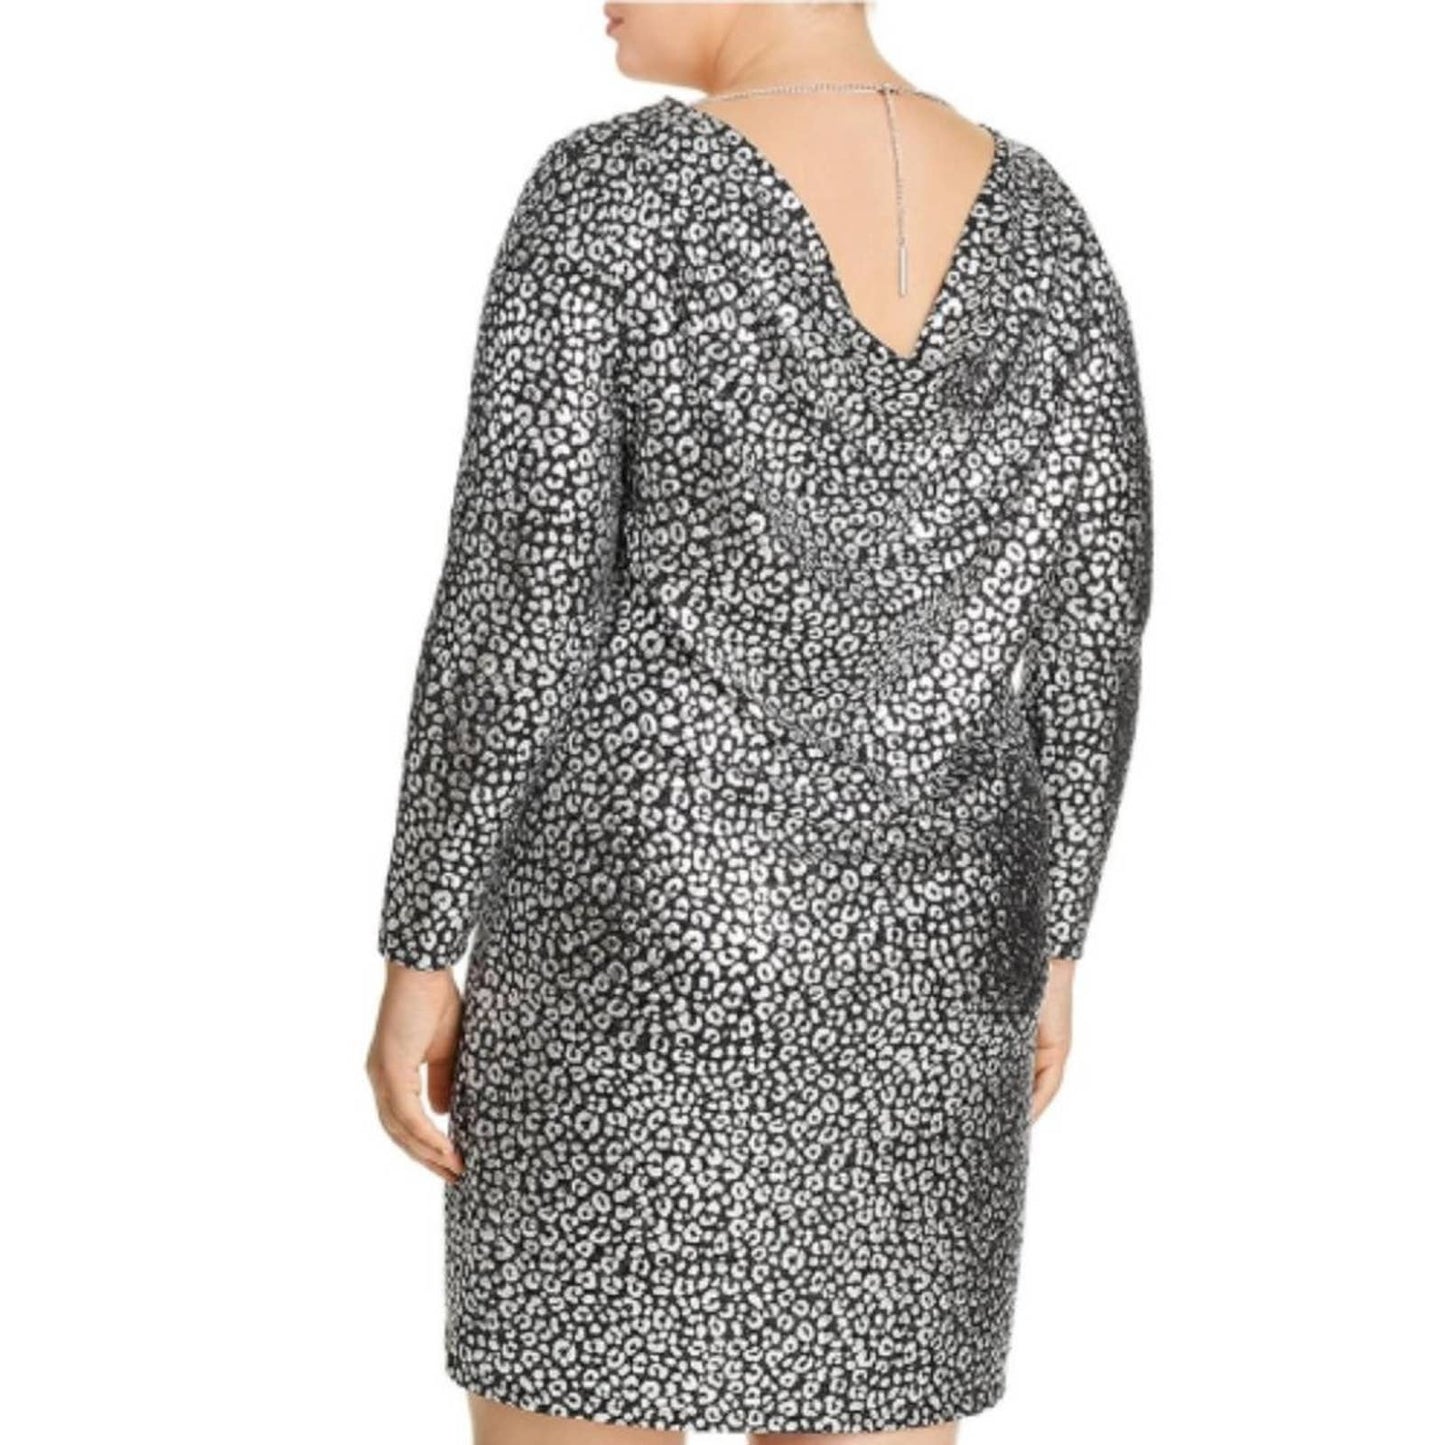 Michael Kors Black and Silver Plus Size Animal Print Sheath Dress NWT Size 2X